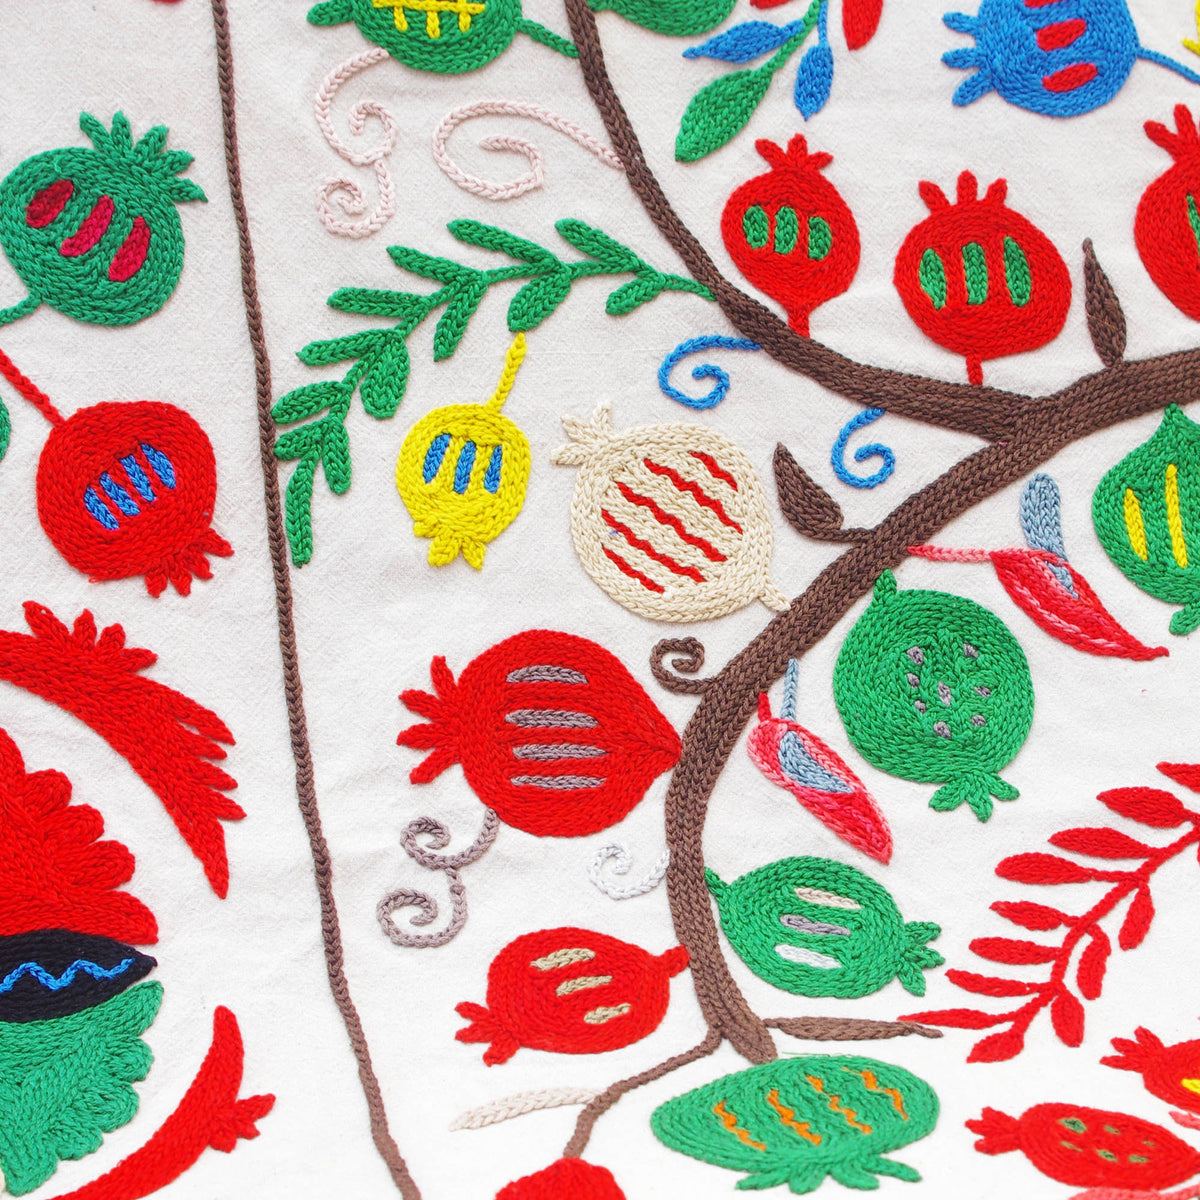 Uzbek Suzani Bedspread With Embroidery -Pomegranate Tree